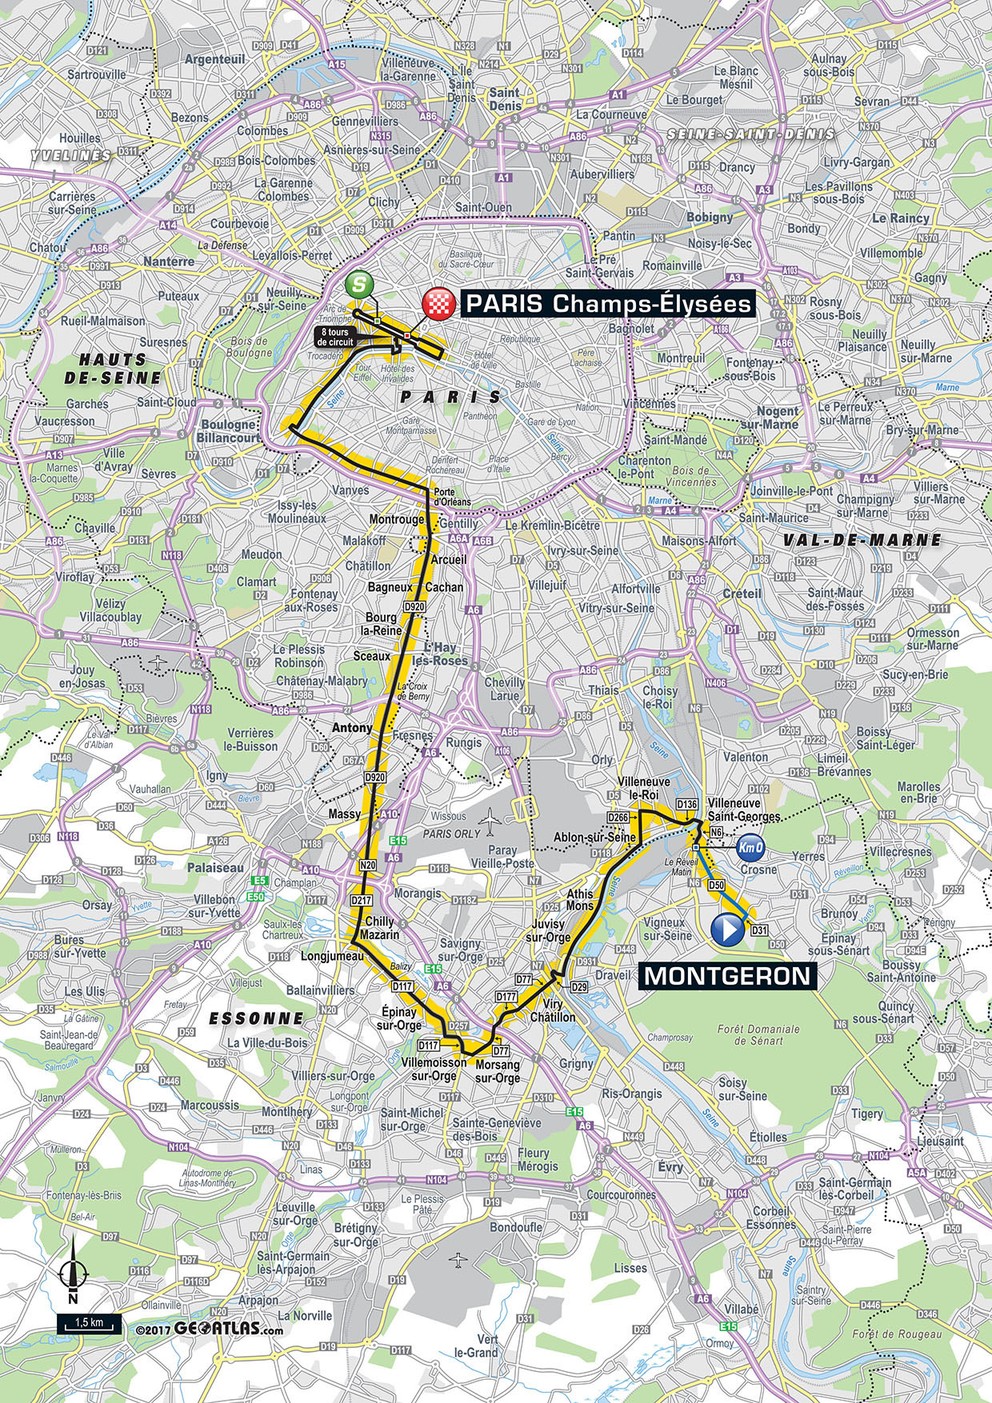 Mapa dvadsiatej prvej etapy Tour de France 2017.